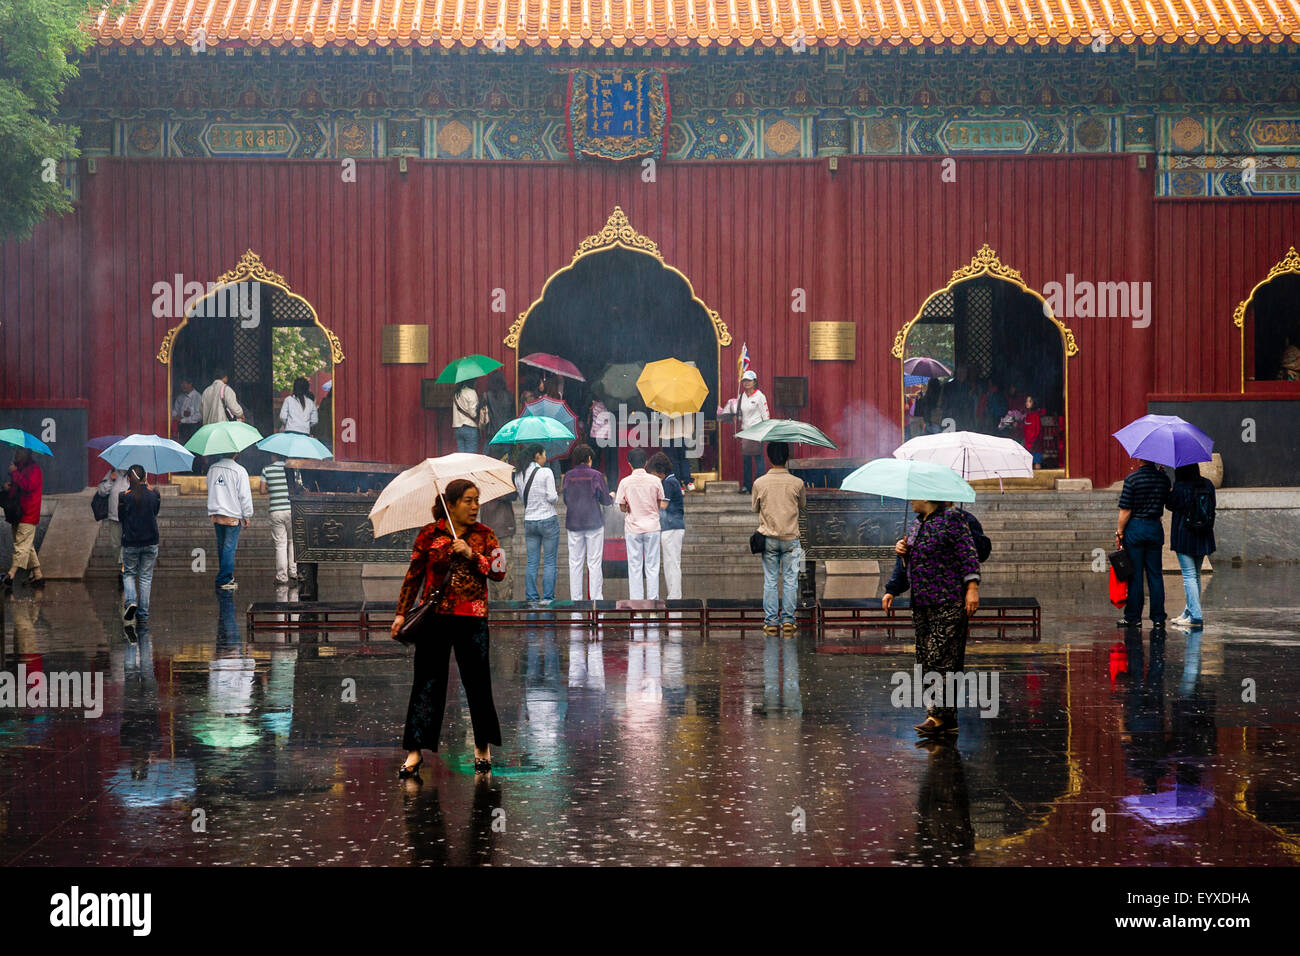 Buddisti presso il Tempio Lama (Yong He Gong) Pechino, Cina Foto Stock